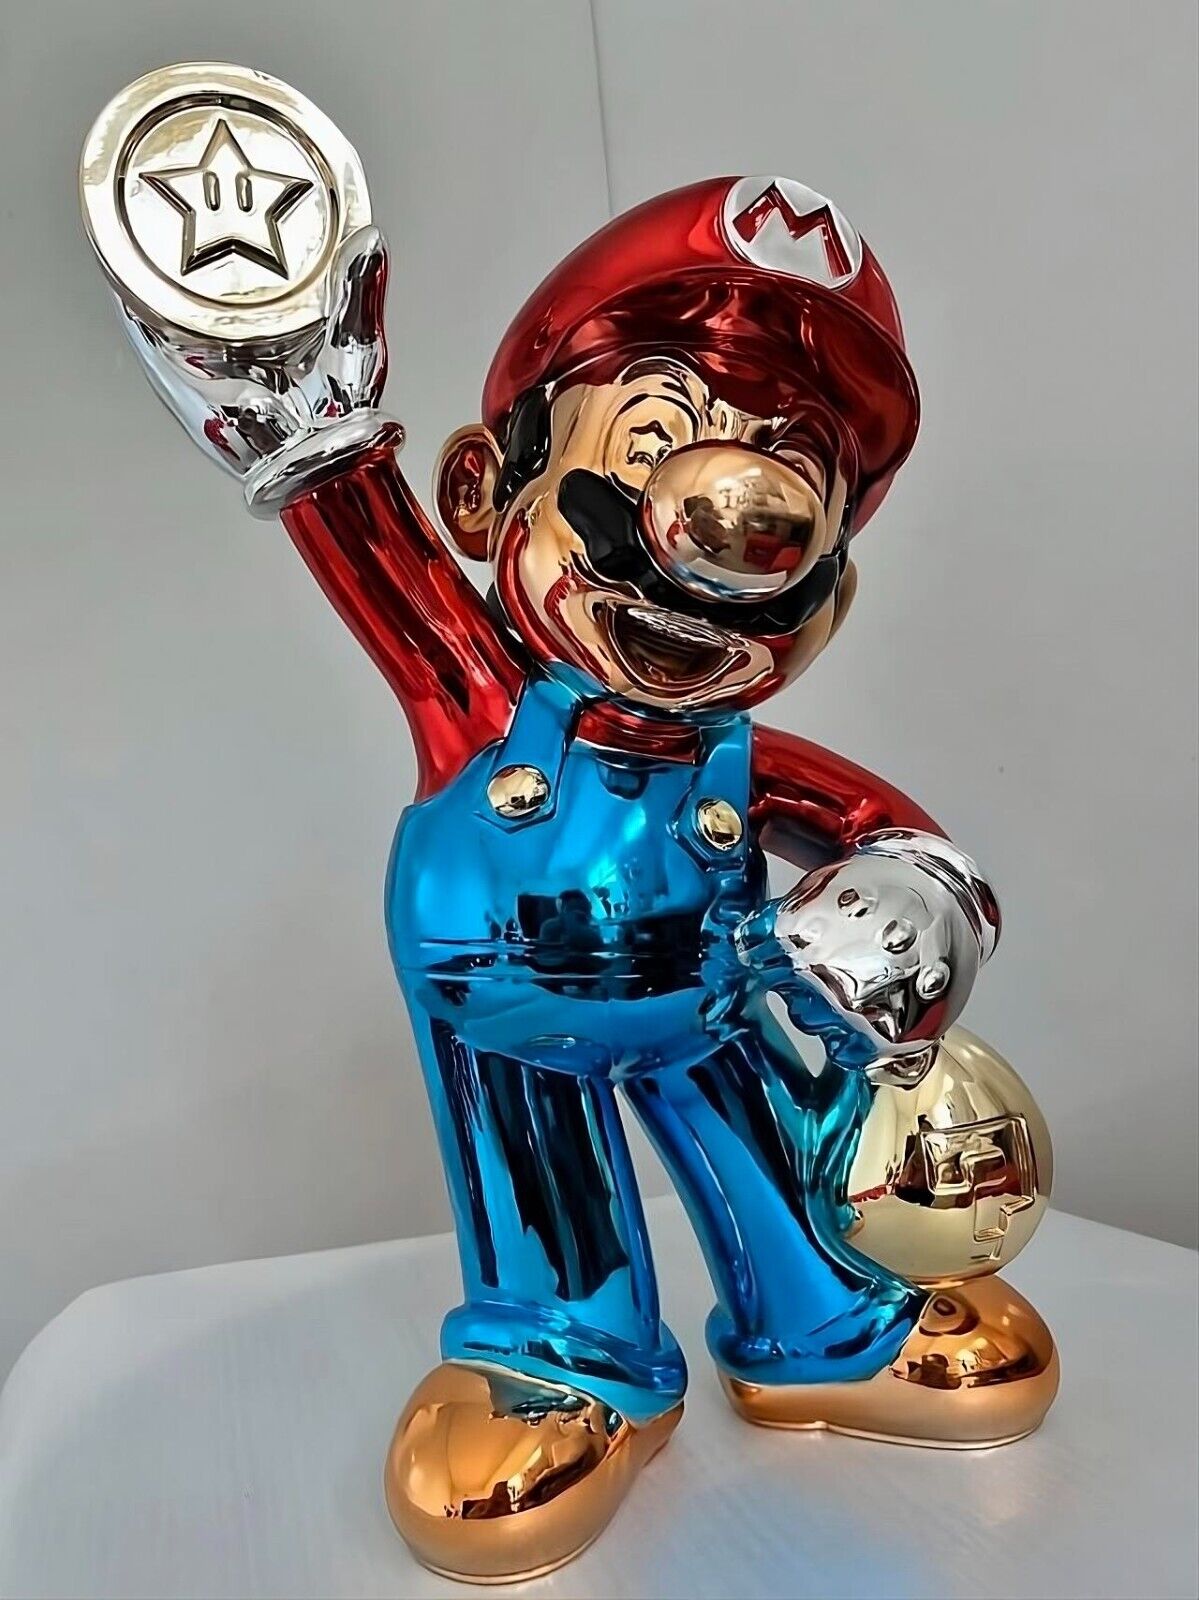 Super Mario Sculpure, Custom made Coated in colorful Chrome